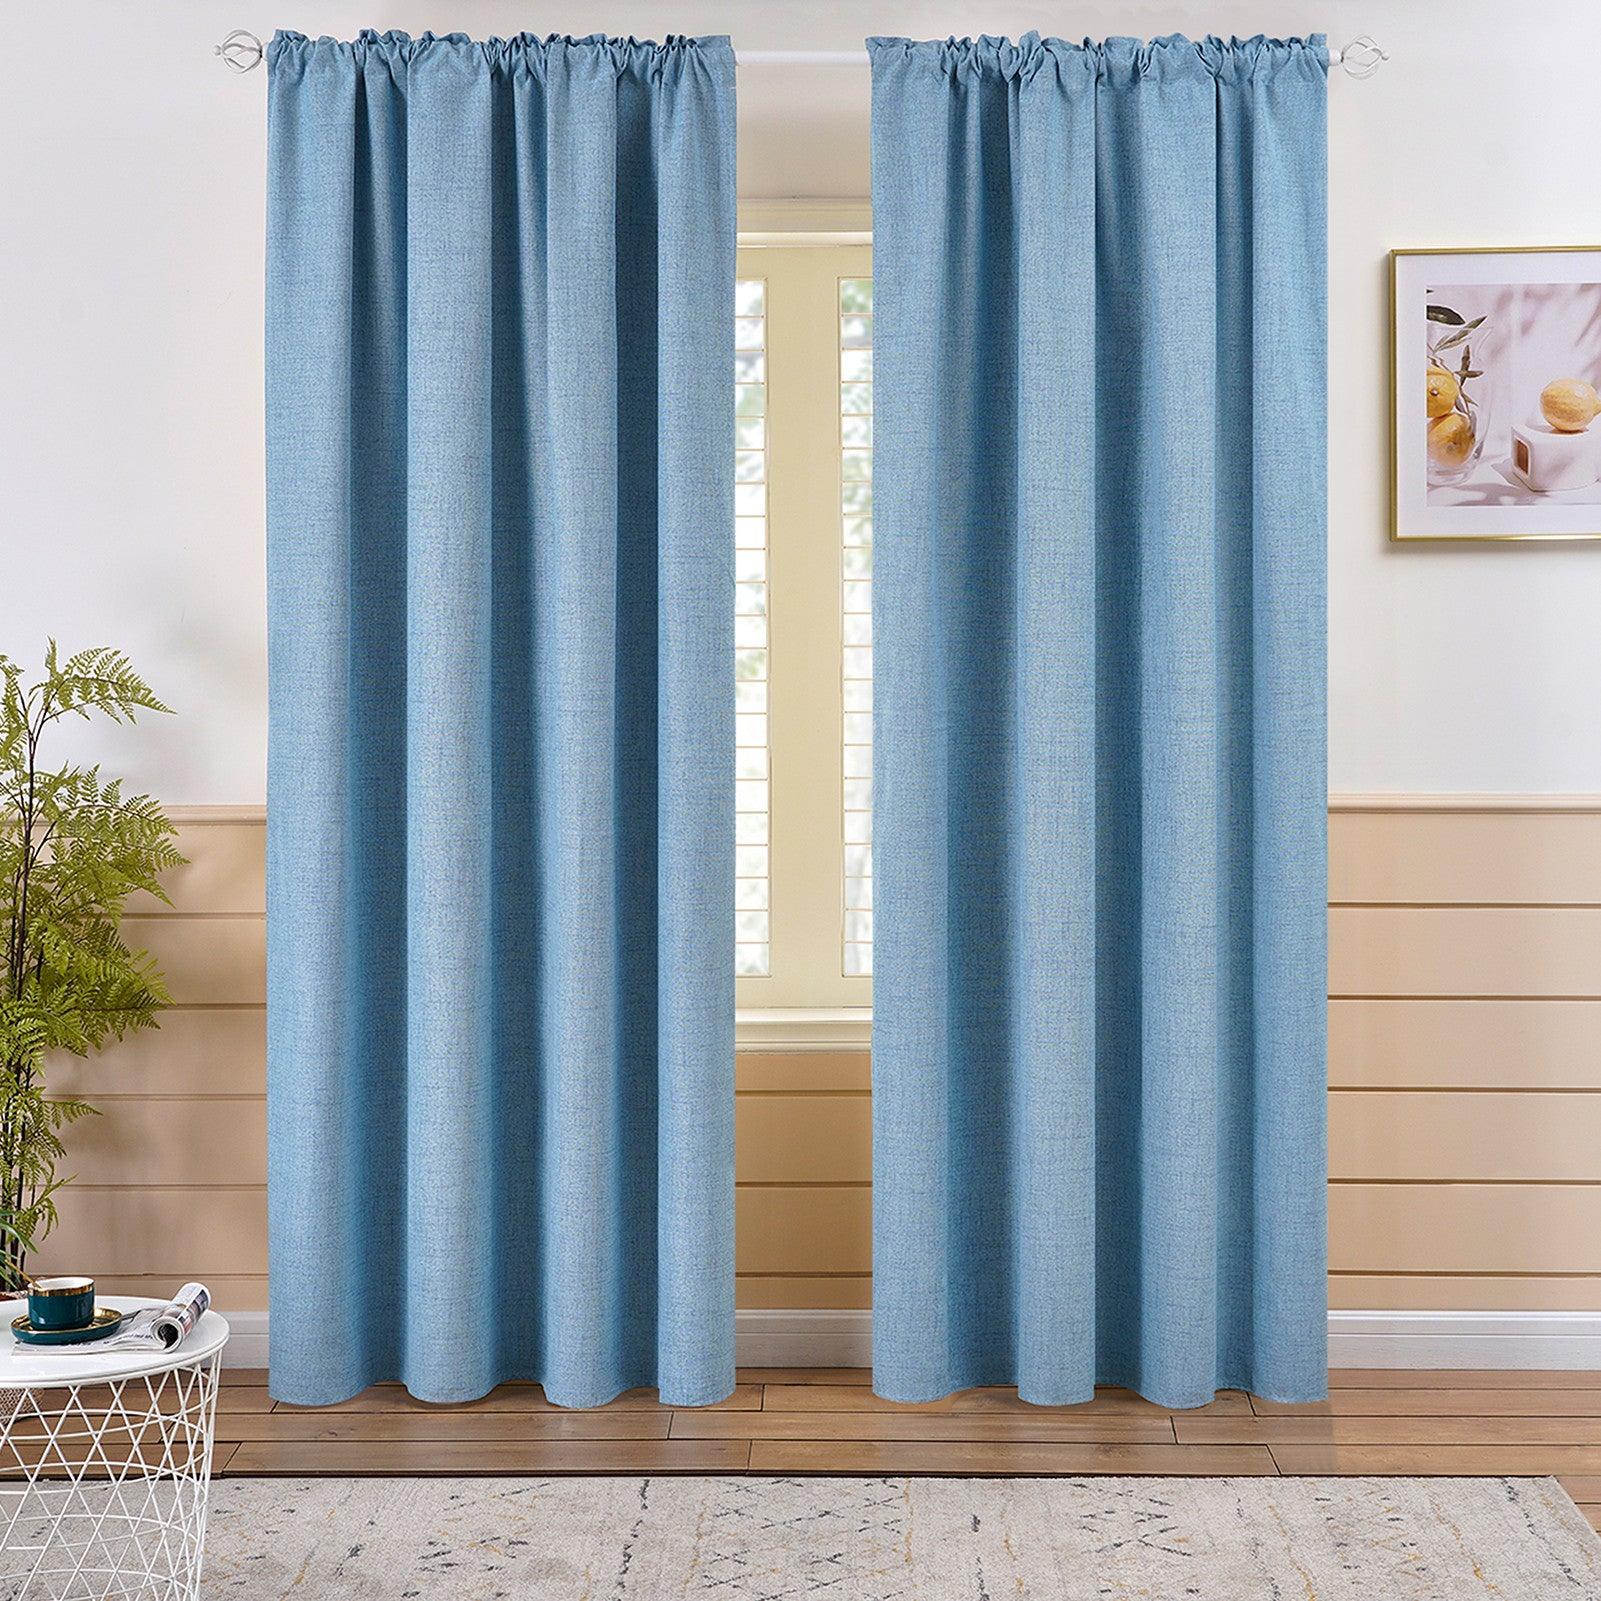 Topfinel Boho Curtains And Decorkitchen Living Room Shop Online